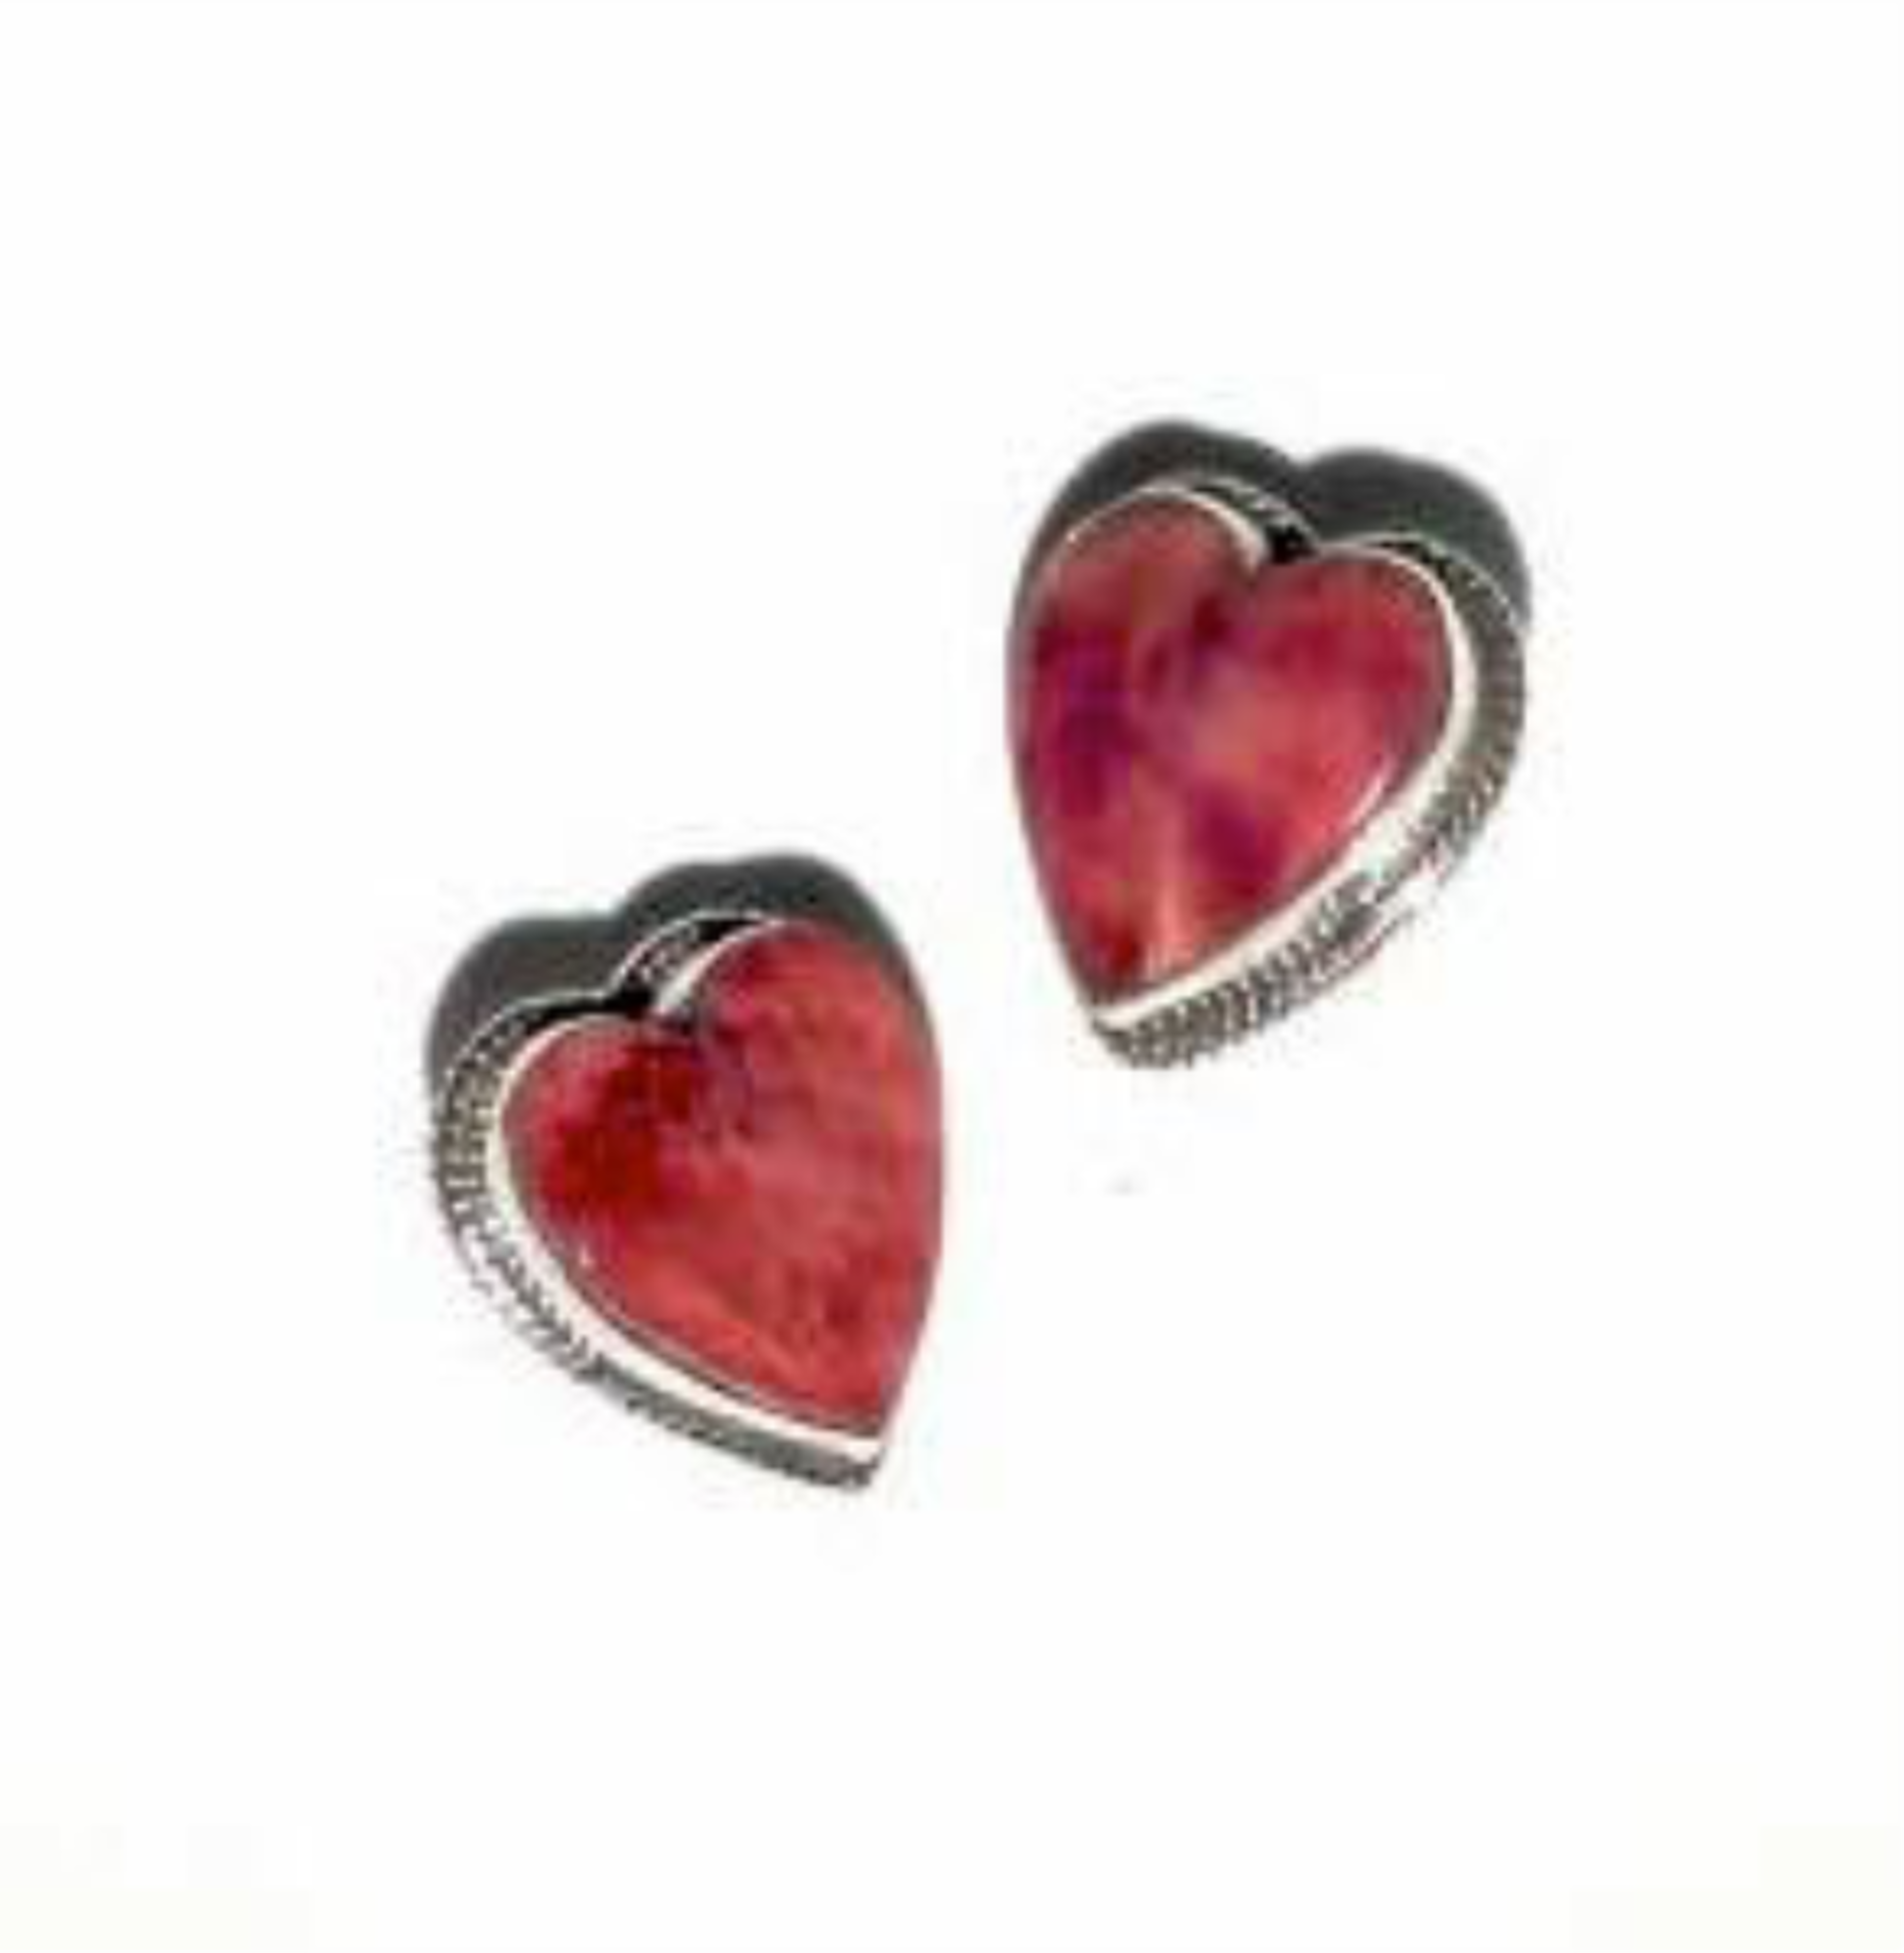 Earrings - Sterling Silver Spiny Oyster Heart Post 1574 by Dan Dodson